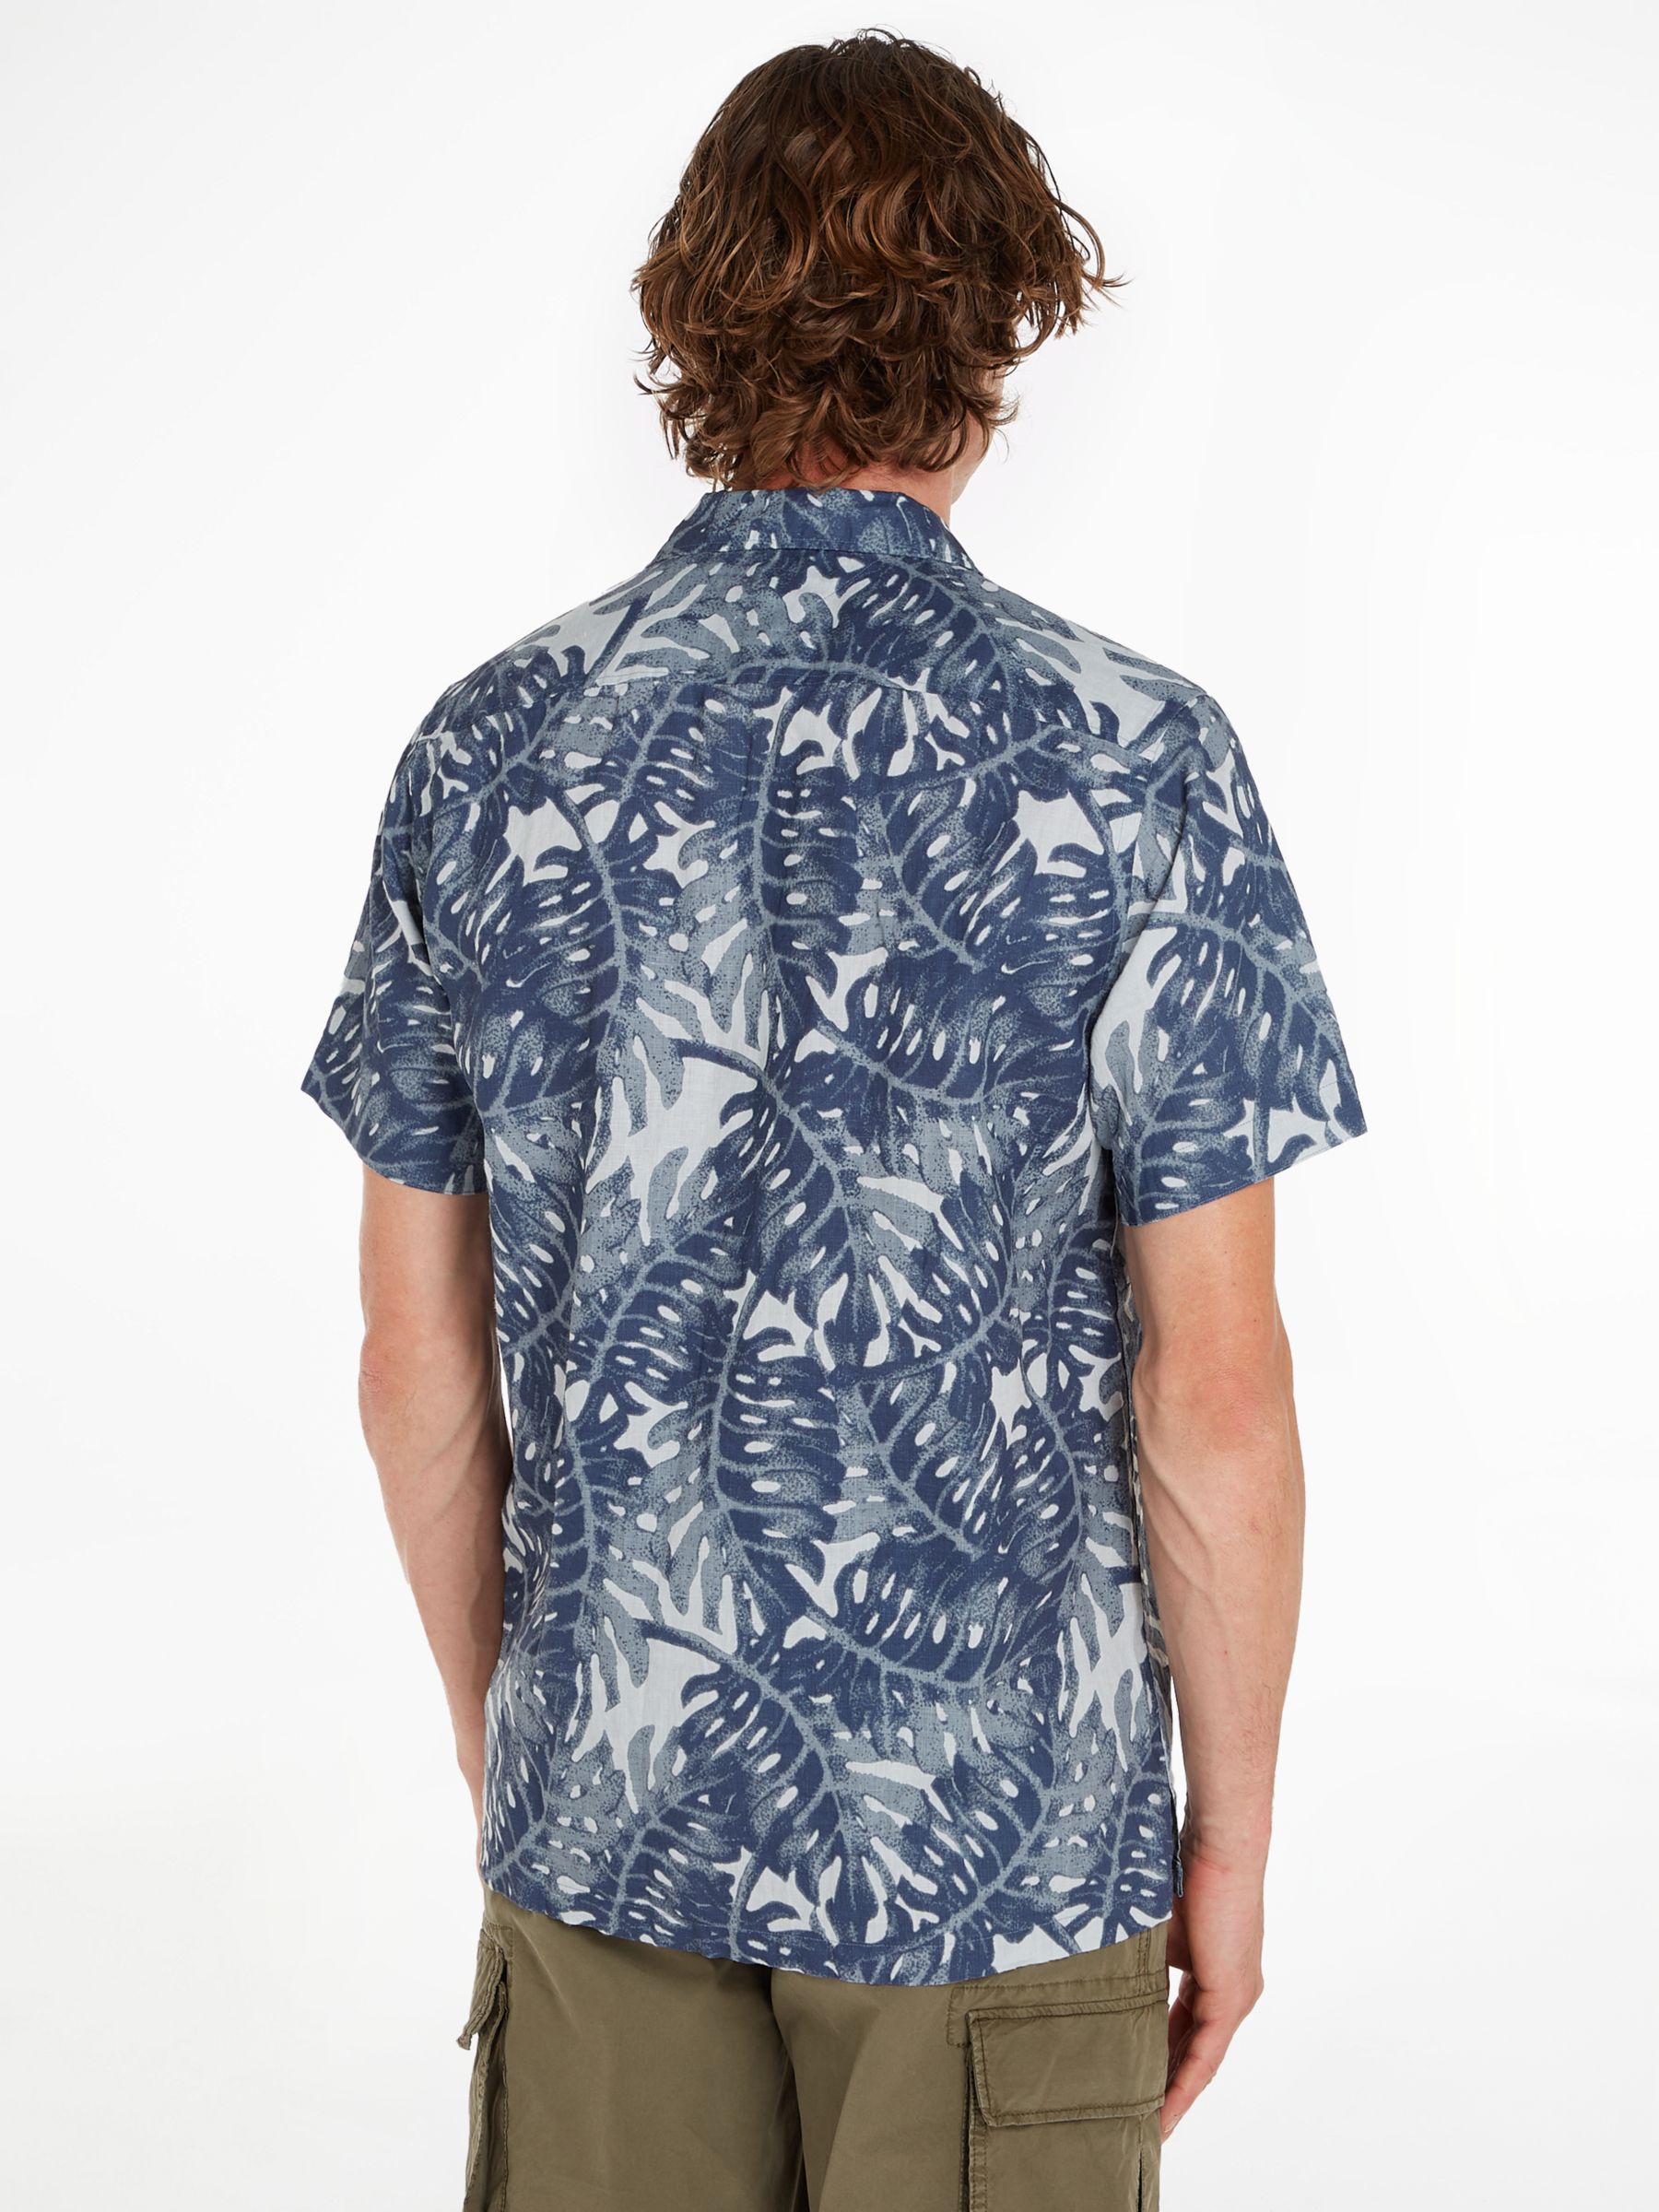 Buy Tommy Hilfiger Foliage Printed Linen Short Sleeve Shirt, Basic Navy/Multi Online at johnlewis.com